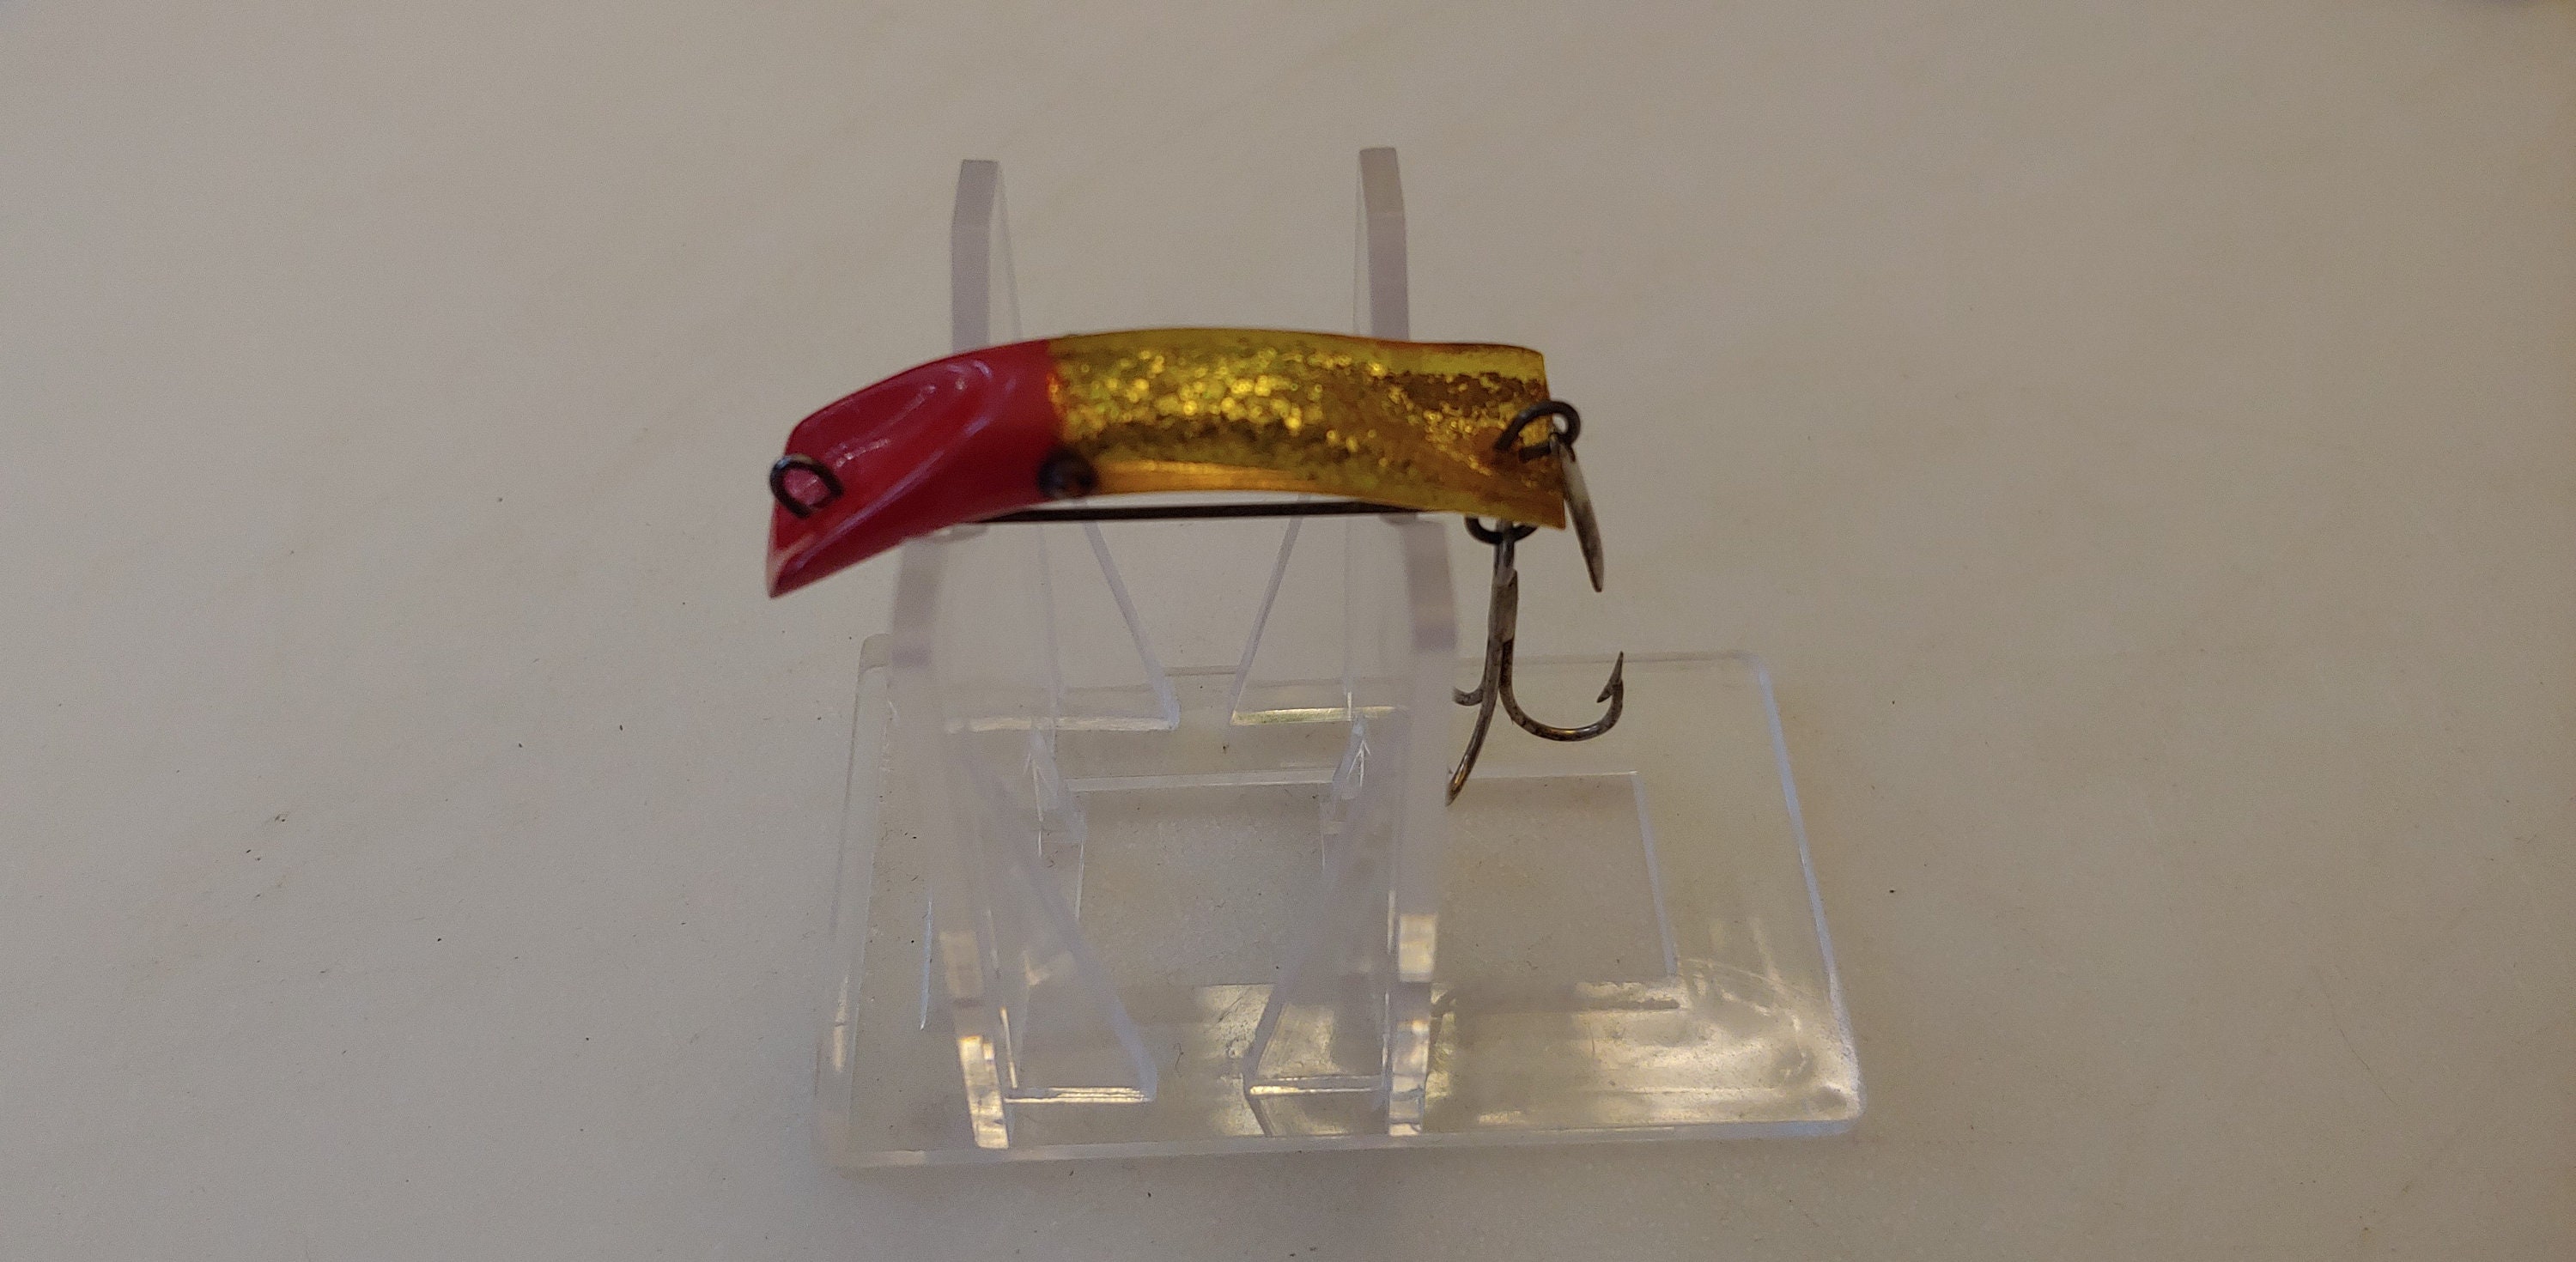 SCARCE 1947 Horrocks-ibbotson Fly Rod Get Fish Lure Much Older Than Vintage  -  Australia